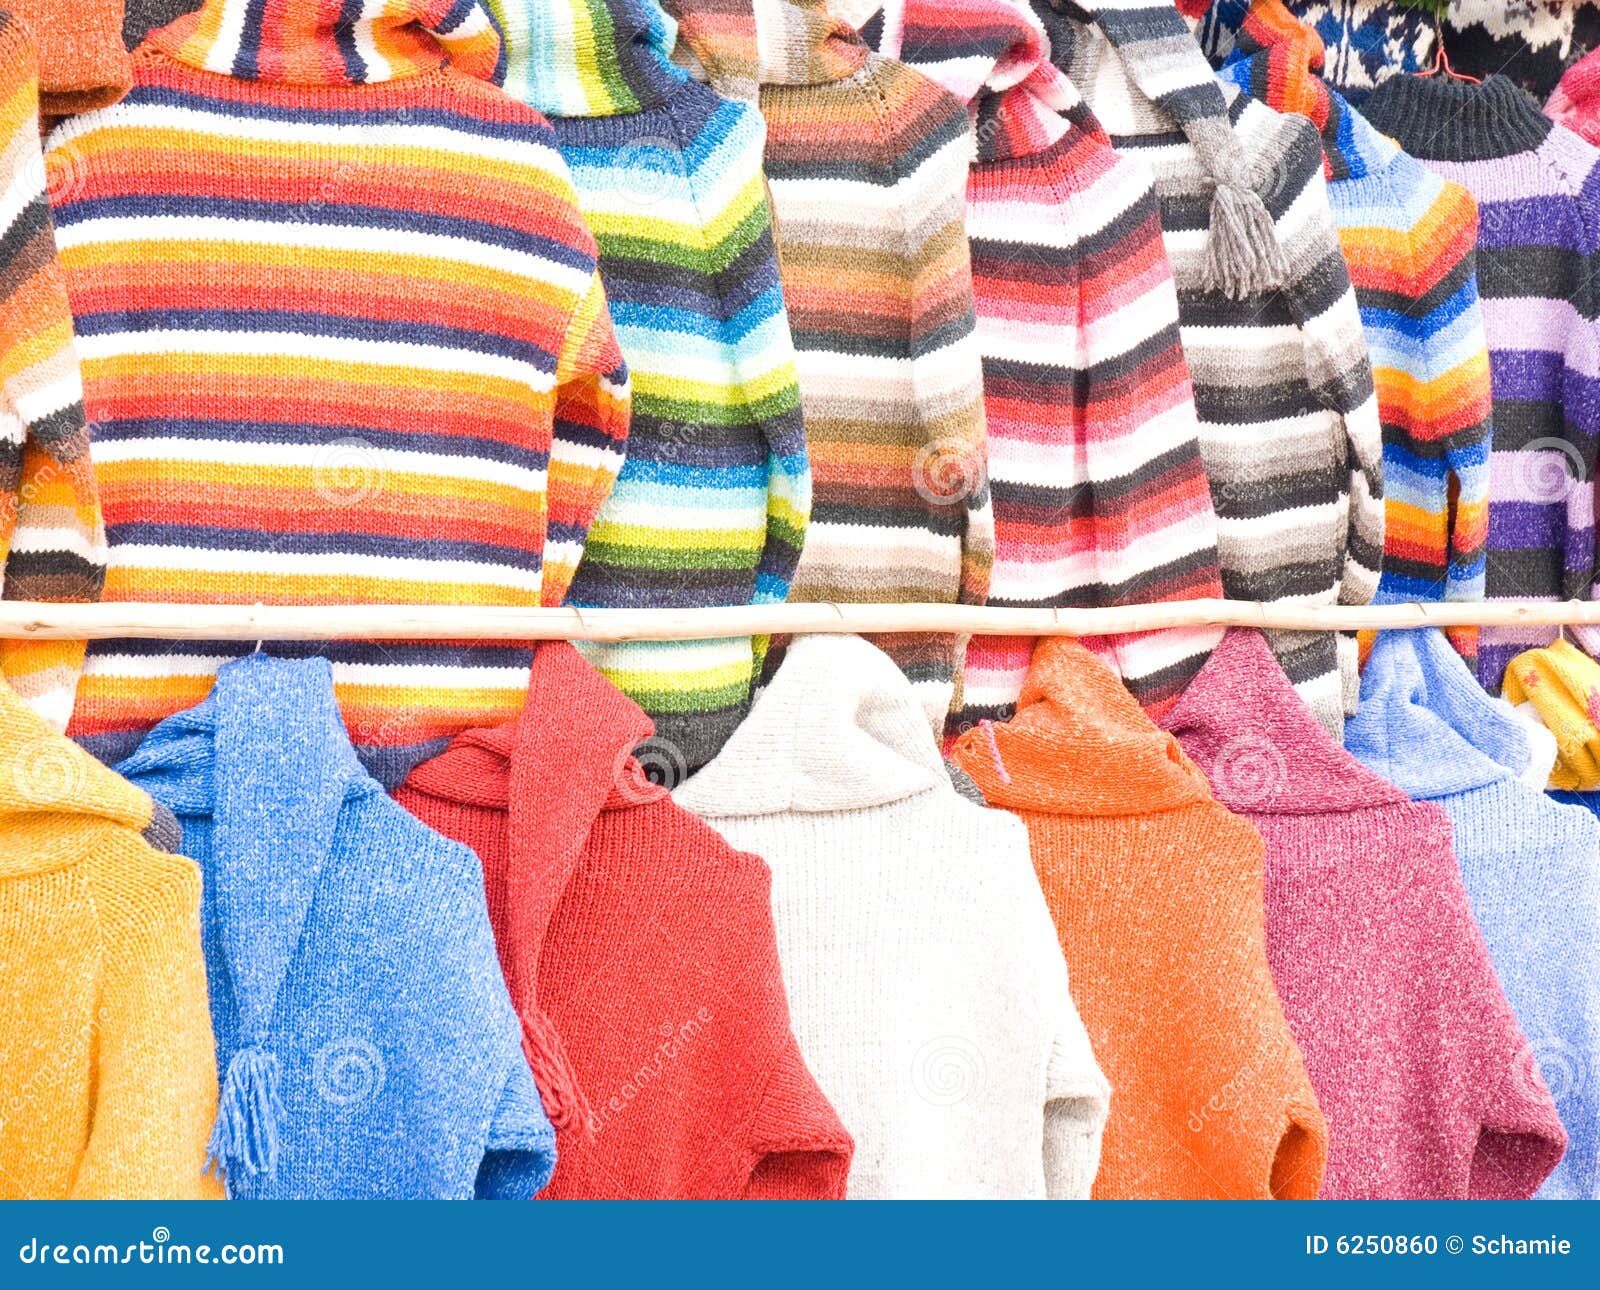 Colorful sweaters stock photo. Image of ecuador, incan - 6250860